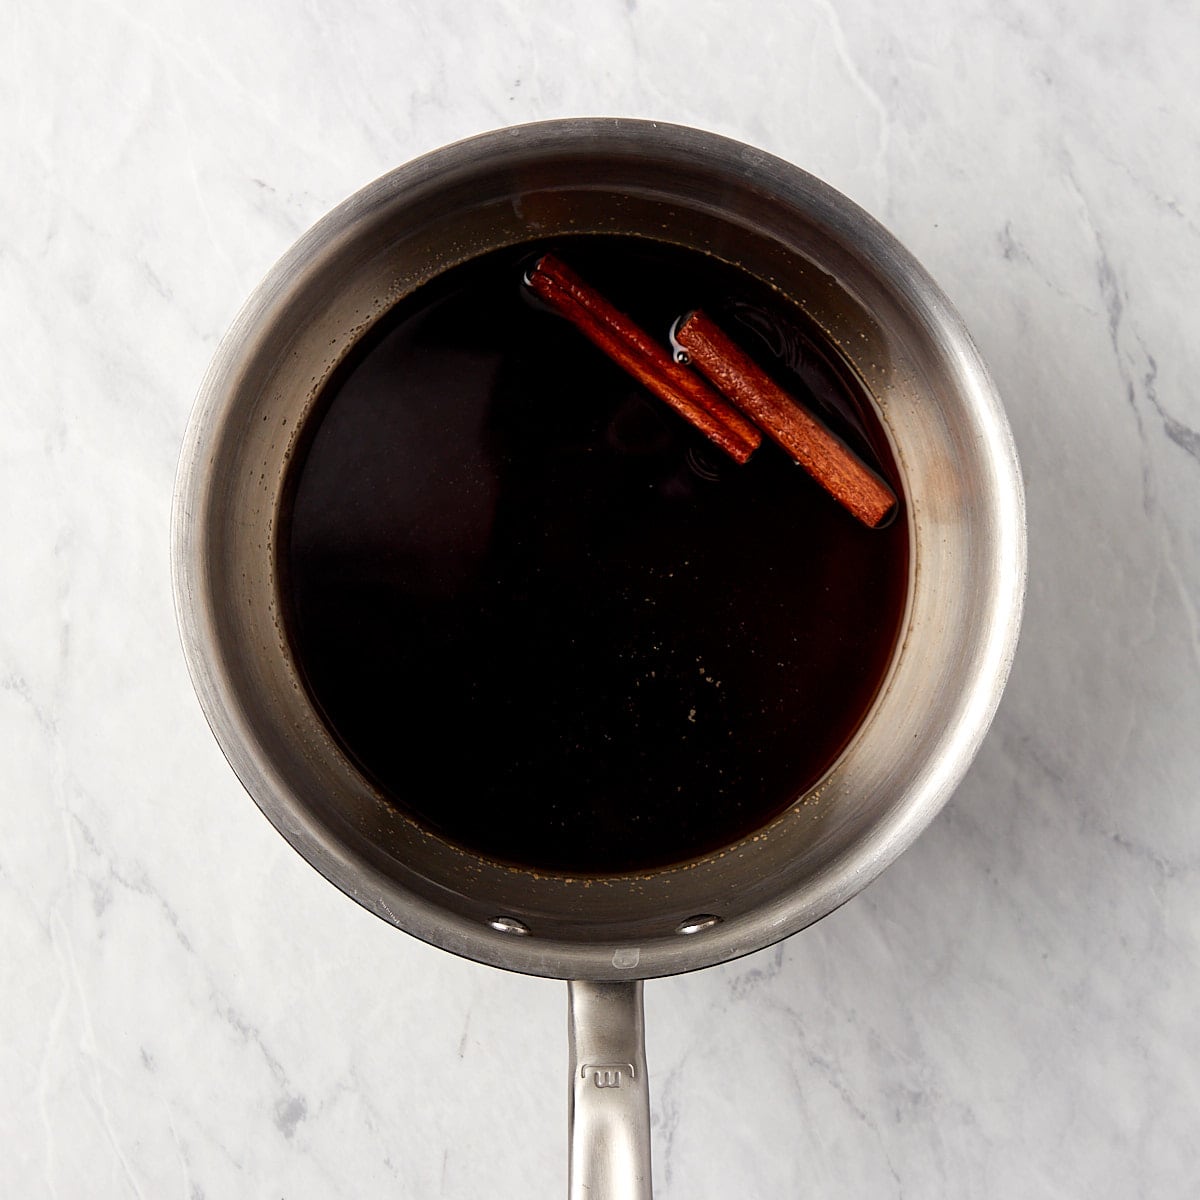 brown sugar simple syrup in a saucepan with cinnamon sticks.